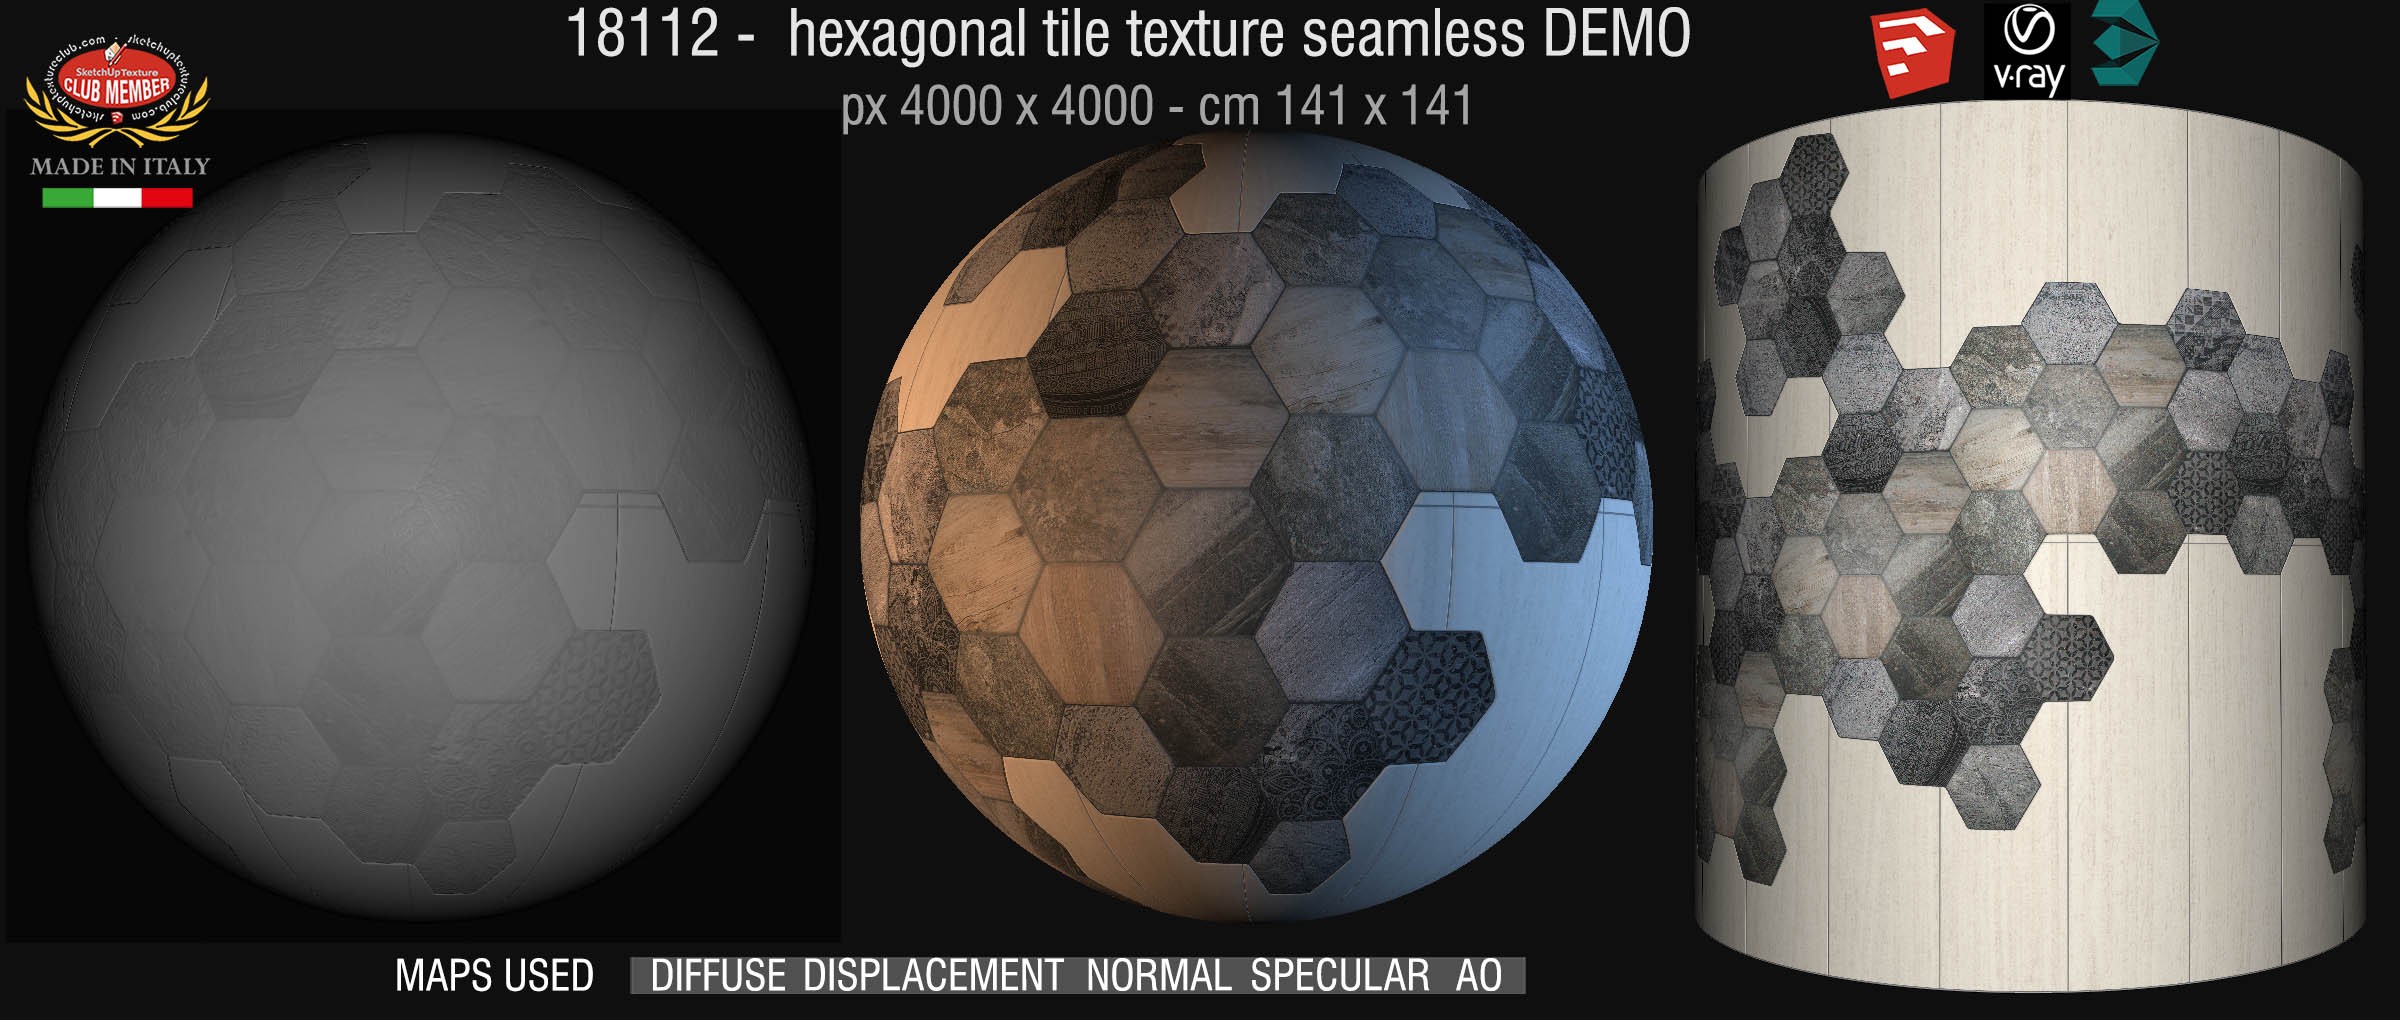 Hexagonal tile texture seamless 18112